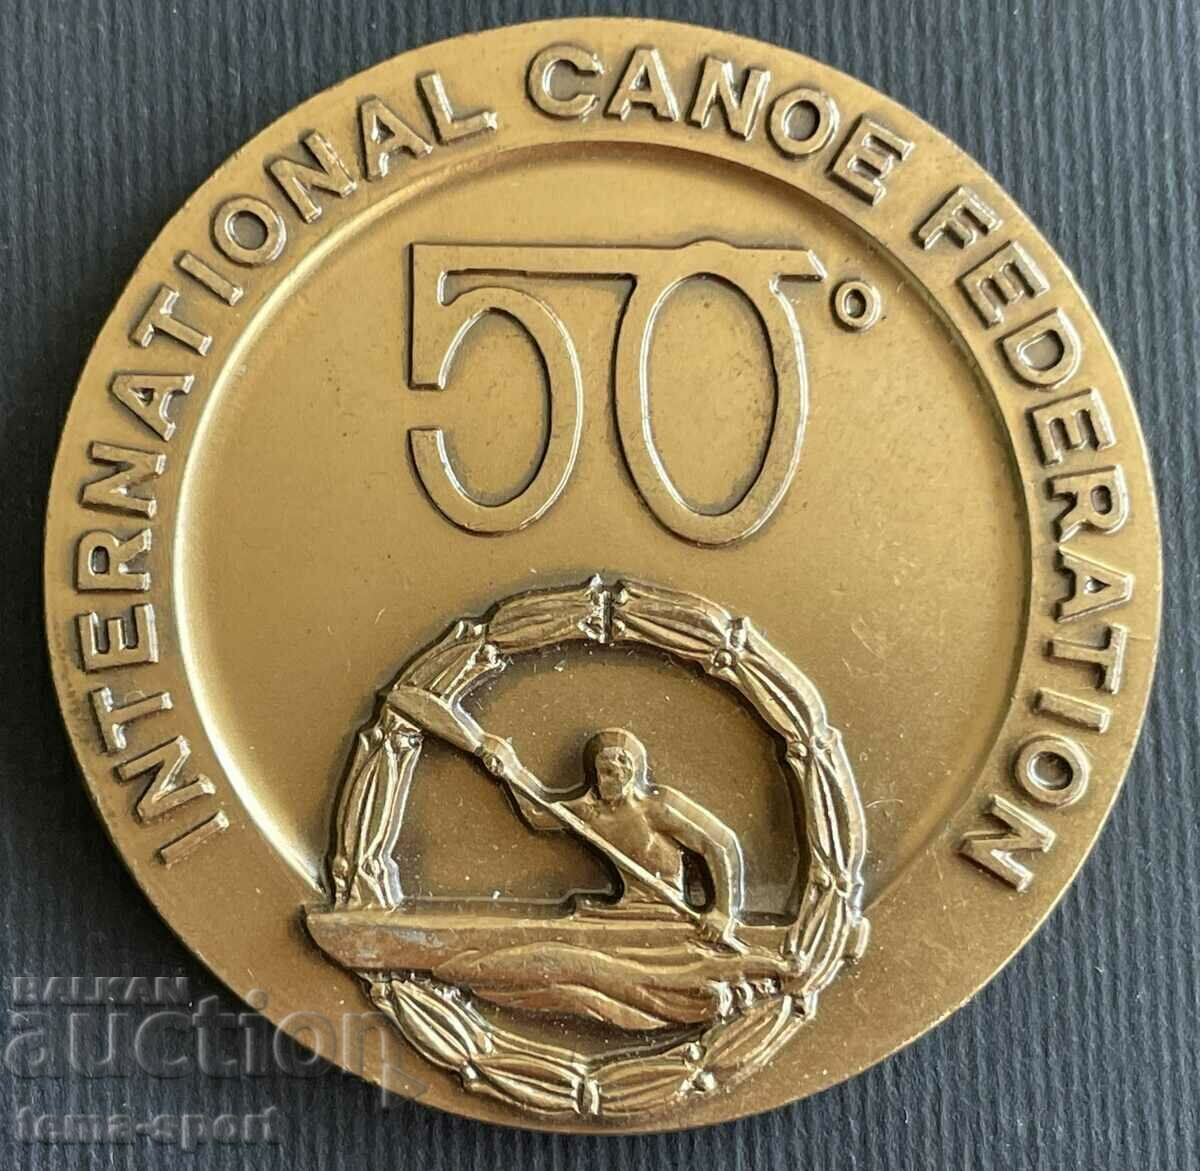 32 Plaque 50 years. International Canoe Federation 1974